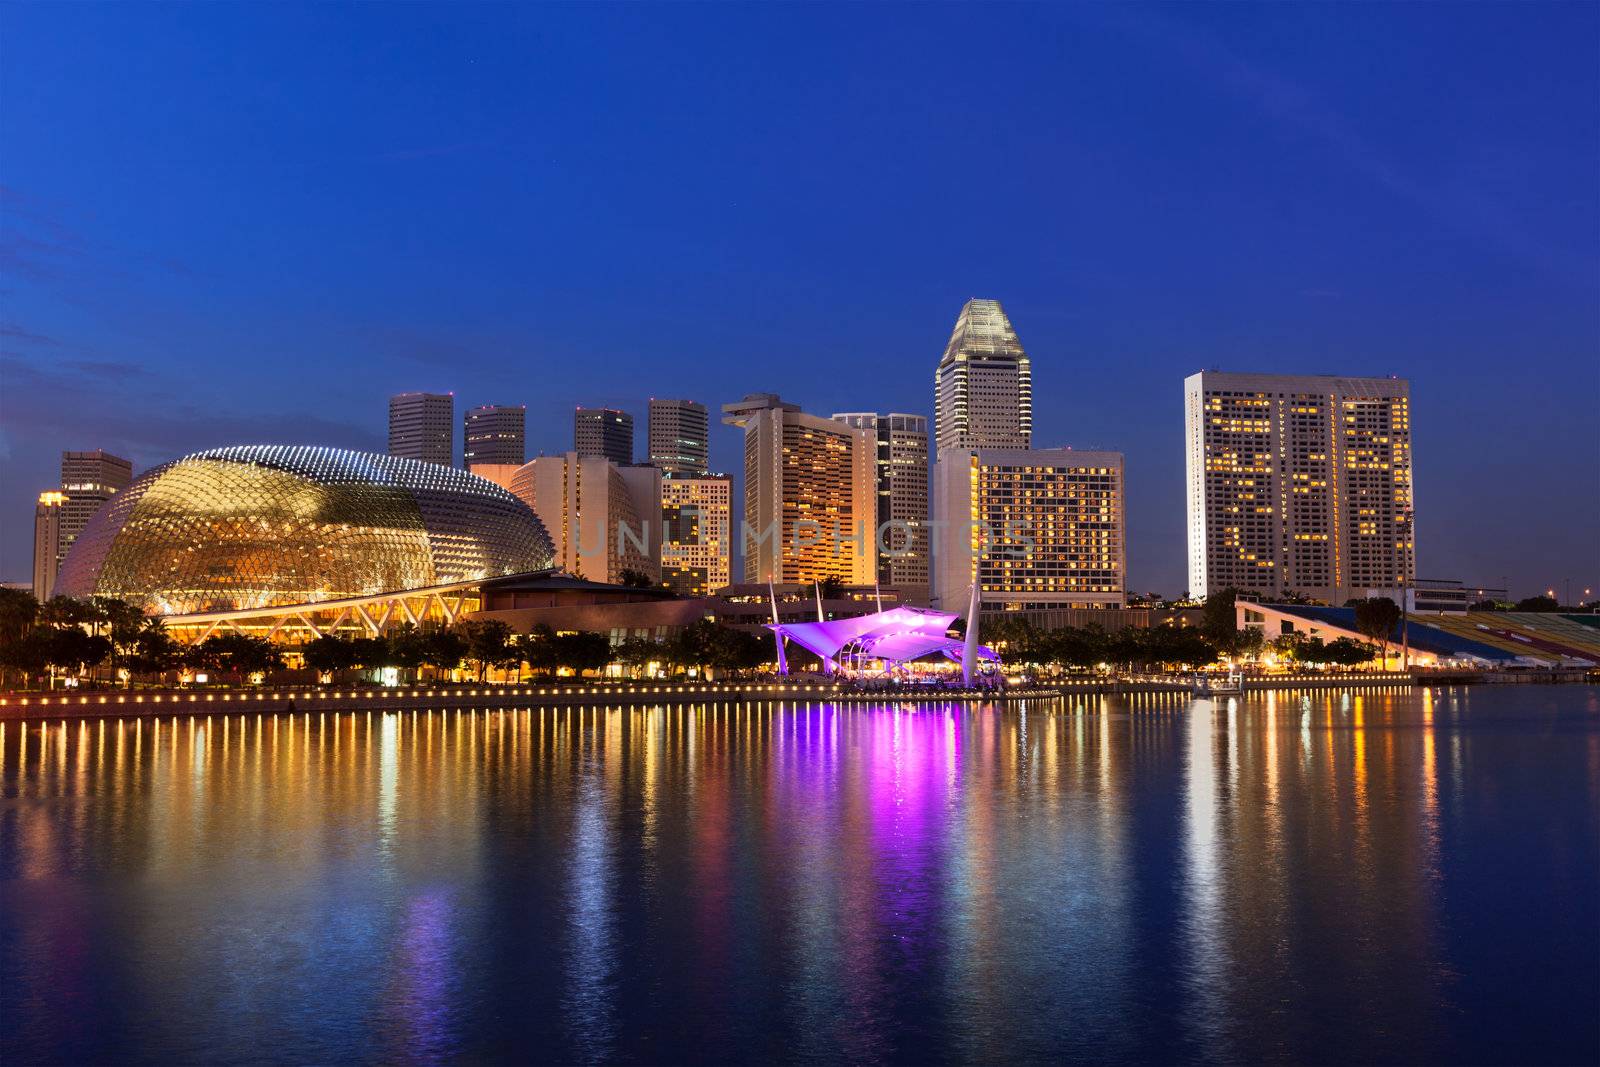 Singapore skyline by dimol